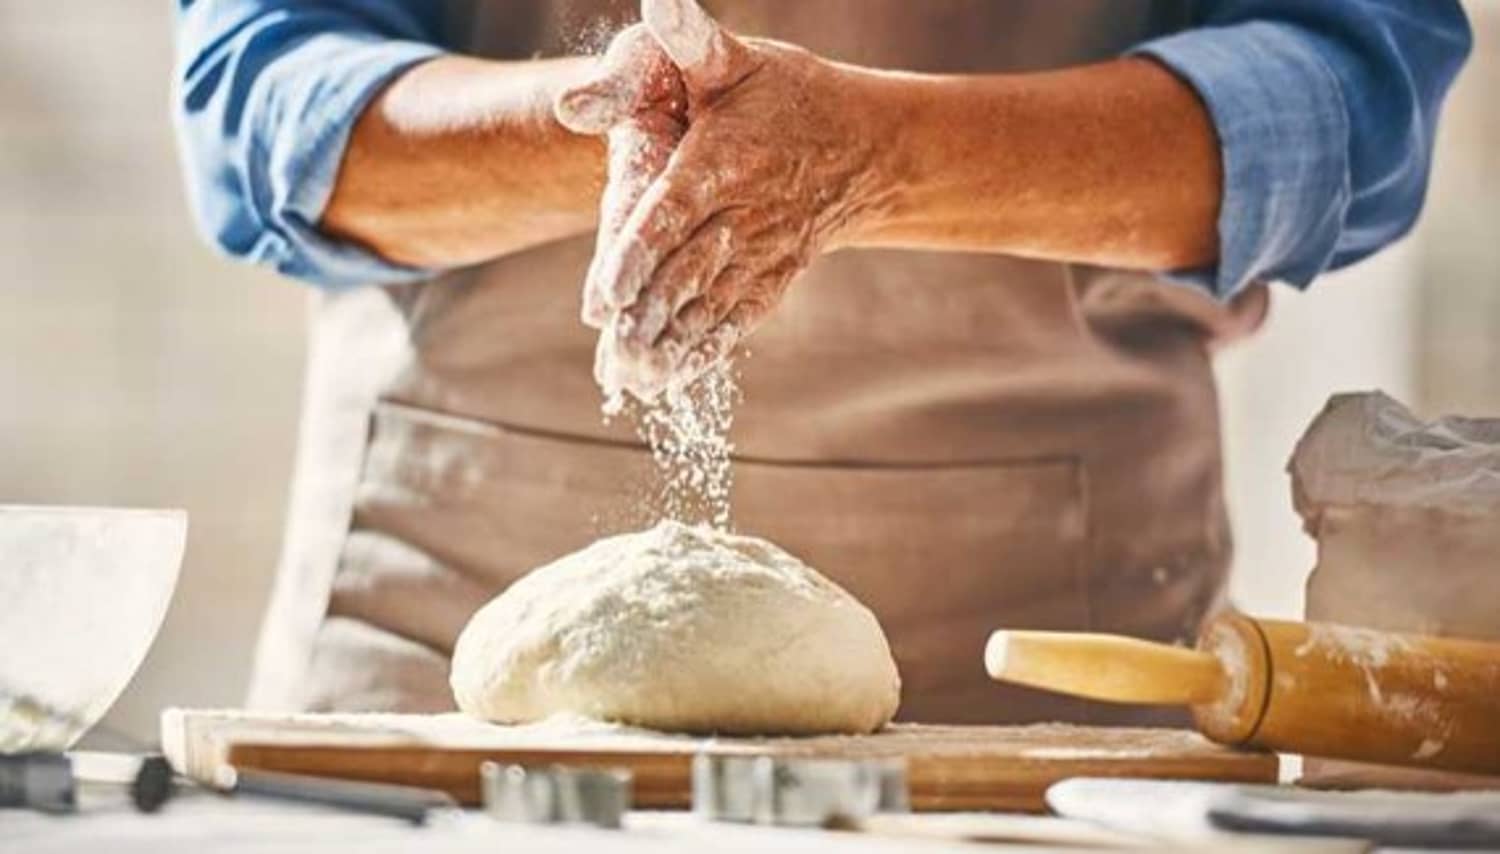 A view of flour falling from hands onto a flour dough ball